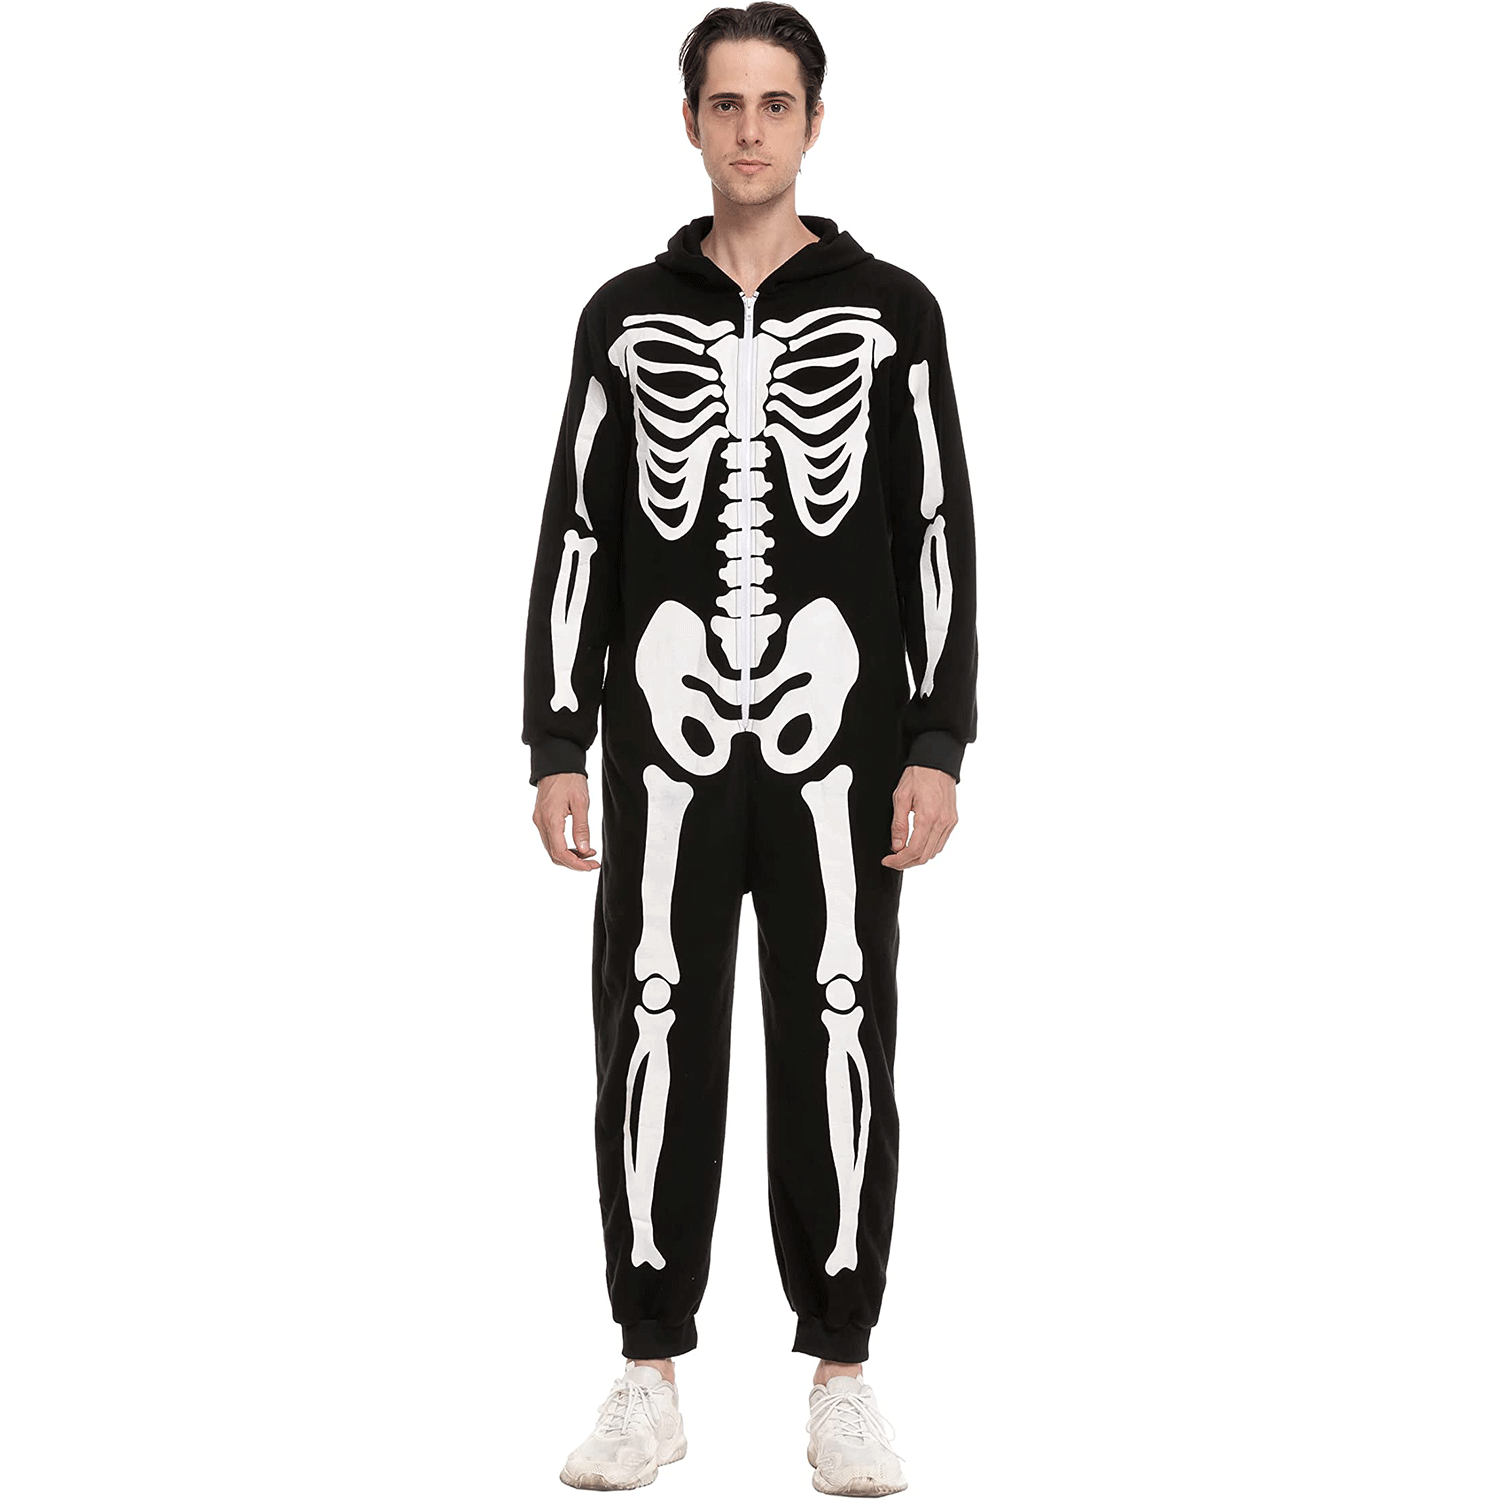 Spooky Skeleton Family Matching Halloween Pajamas